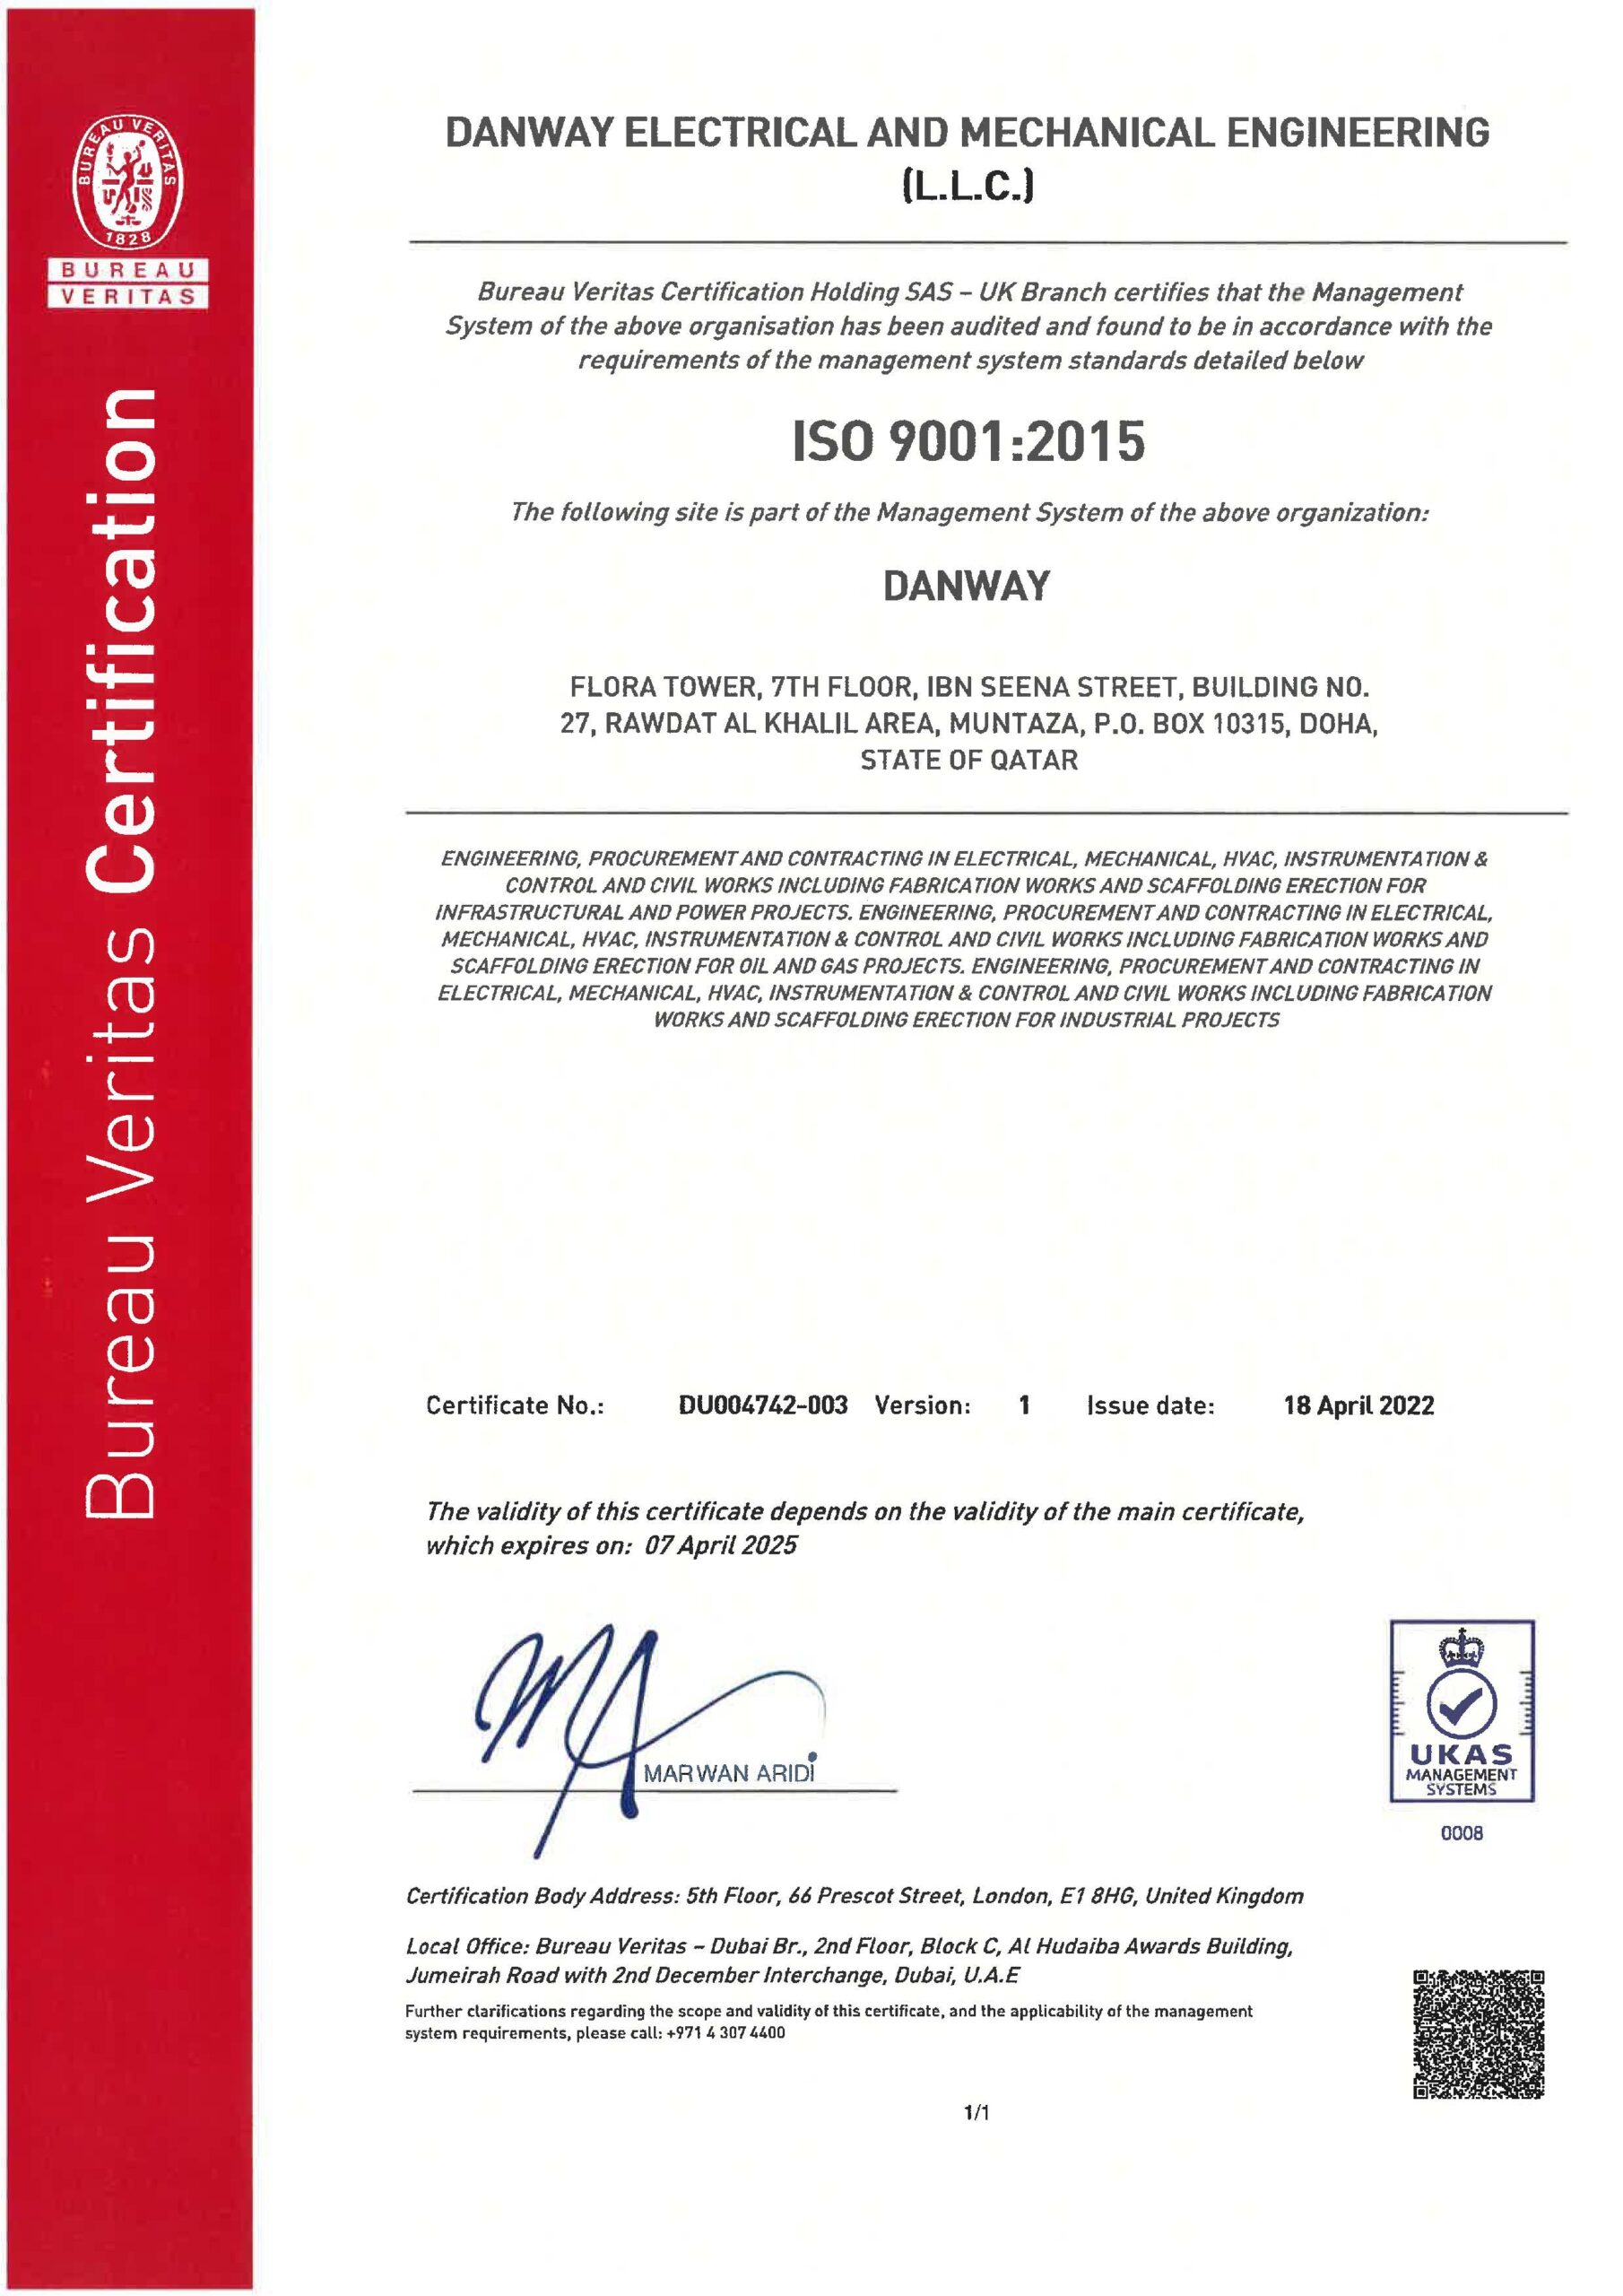 ISO9001:2015 Danway, DOHA, Qatar